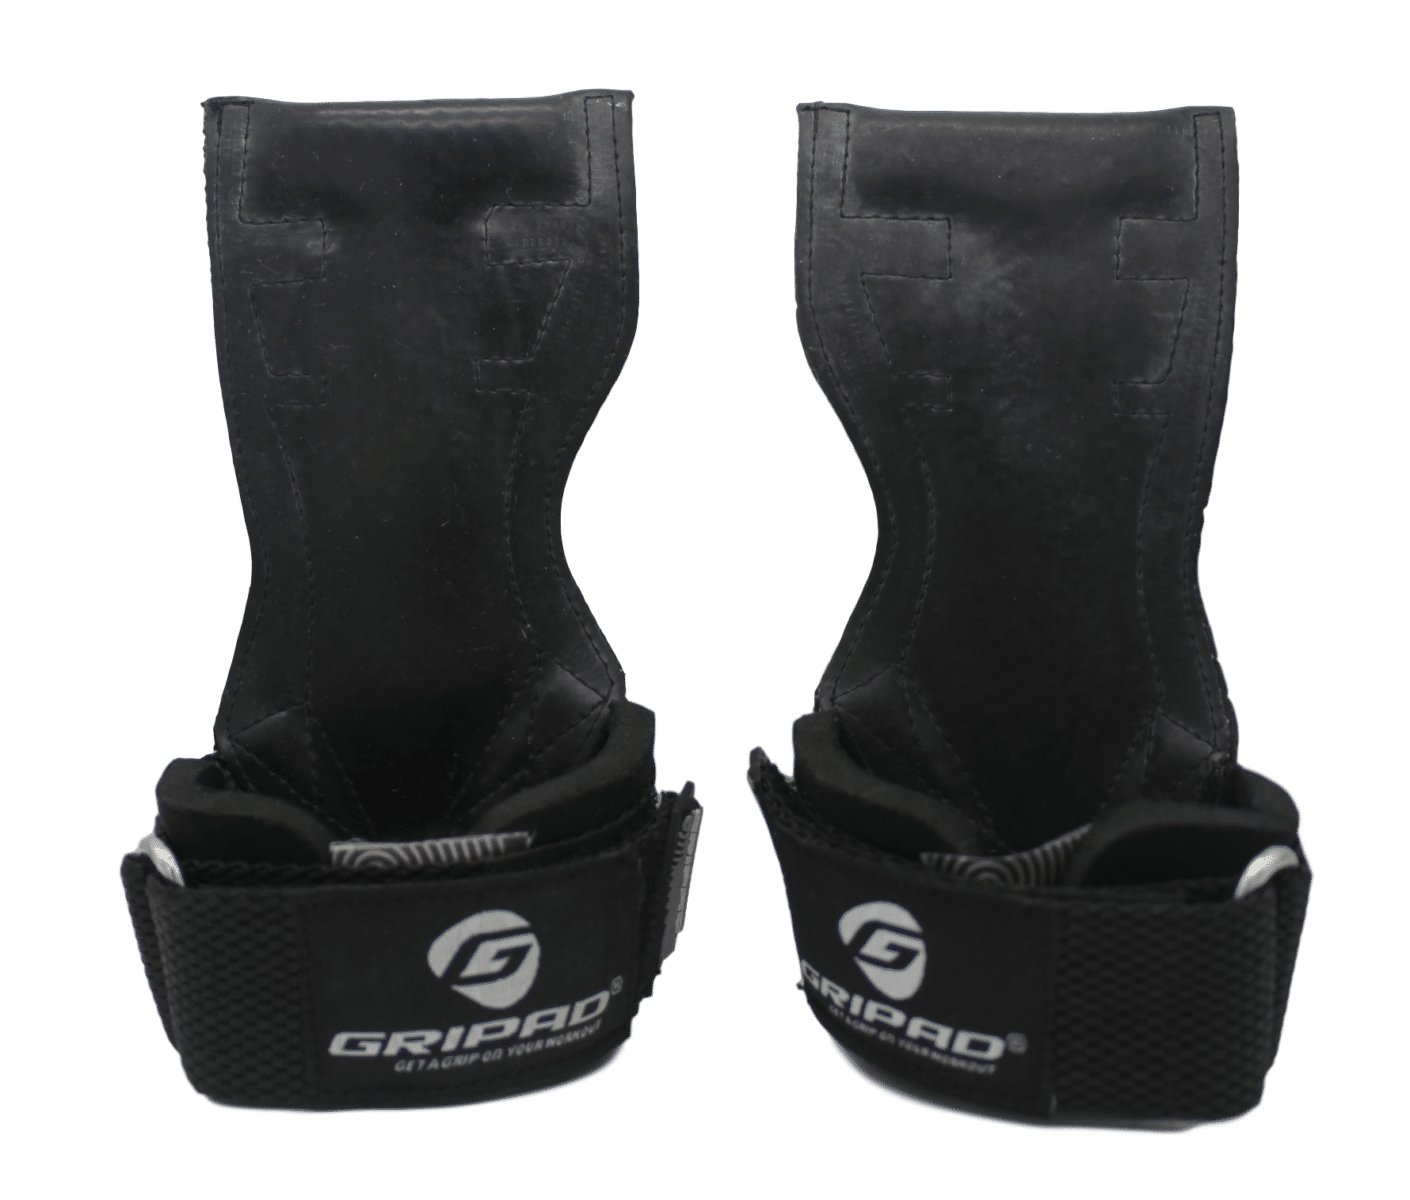 Workout Grips | Gripad PRO Lifting Grips - Black, Large